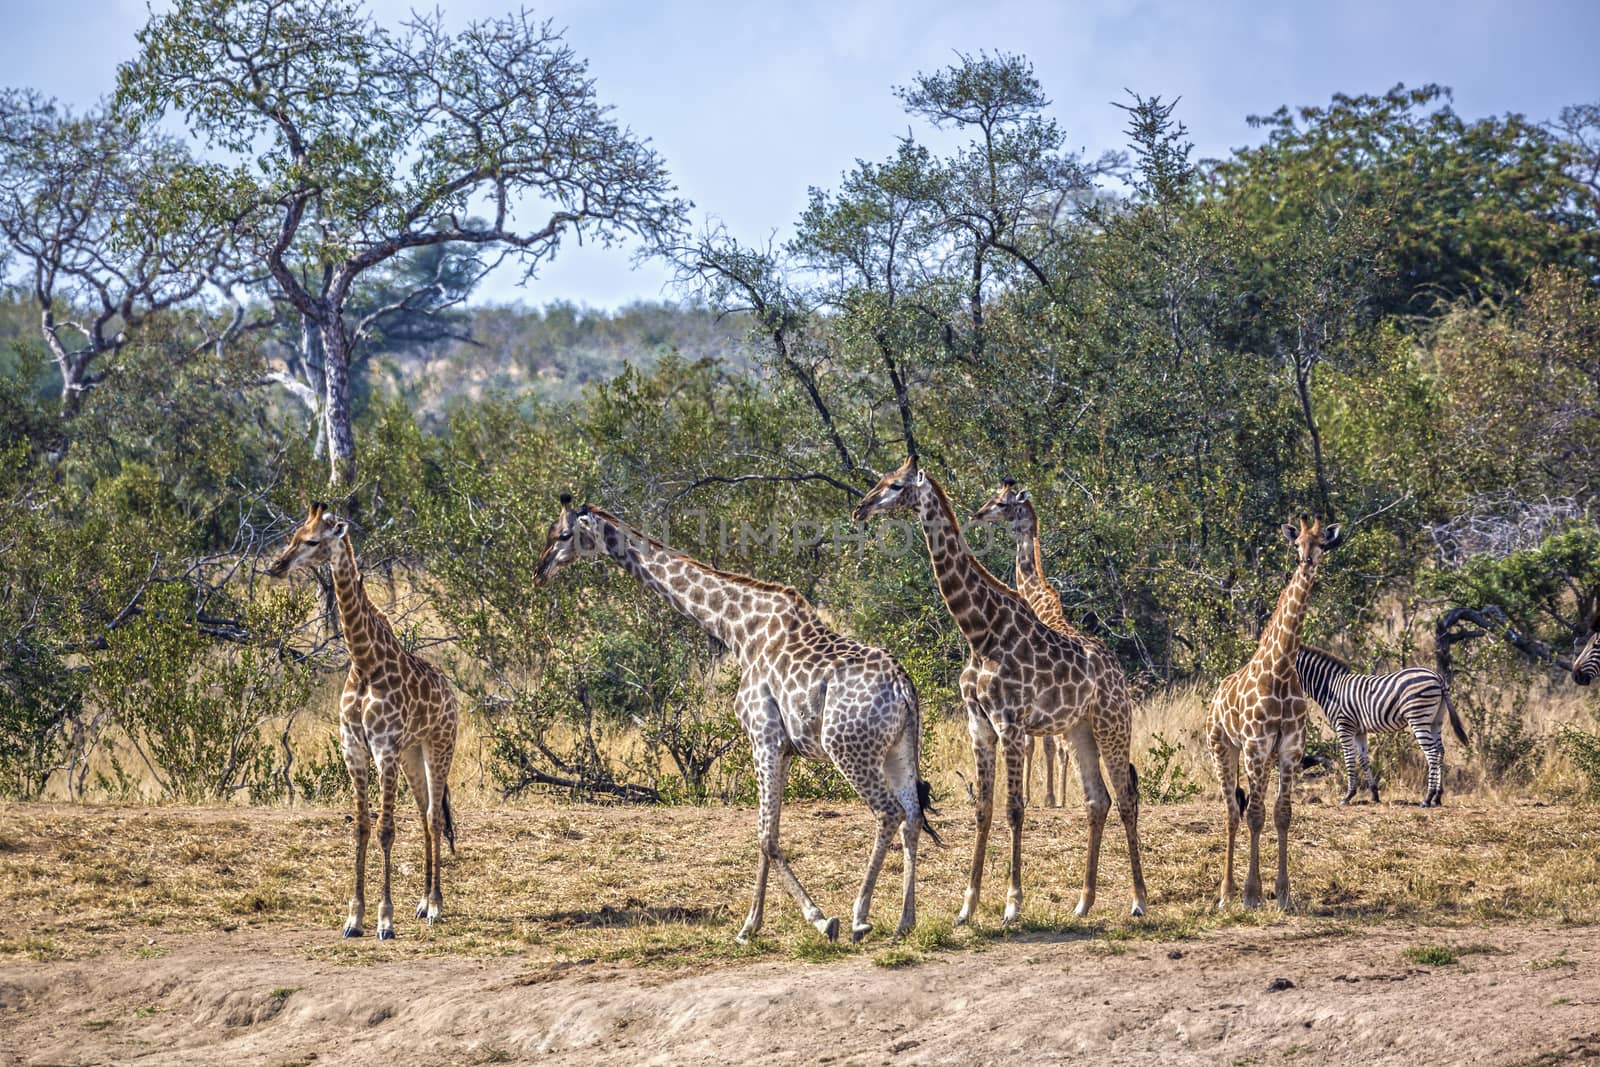 Small group o f Giraffes walking in Kruger National park, South Africa ; Specie Giraffa camelopardalis family of Giraffidae